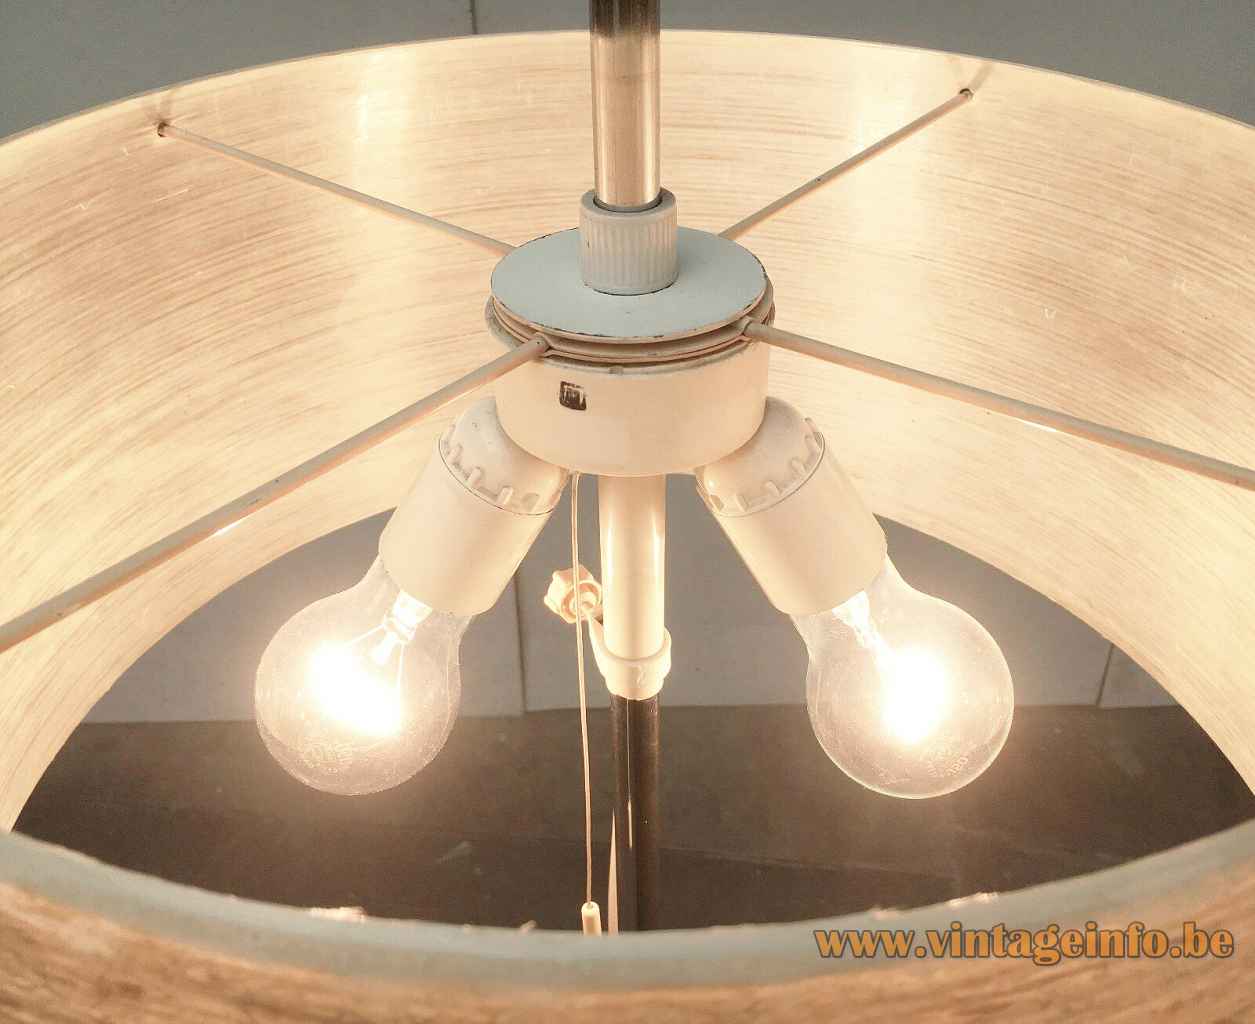 Kaiser Leuchten fibreglass floor lamp adjustable round yellow lampshade 2 E27 sockets 1960s Germany top view